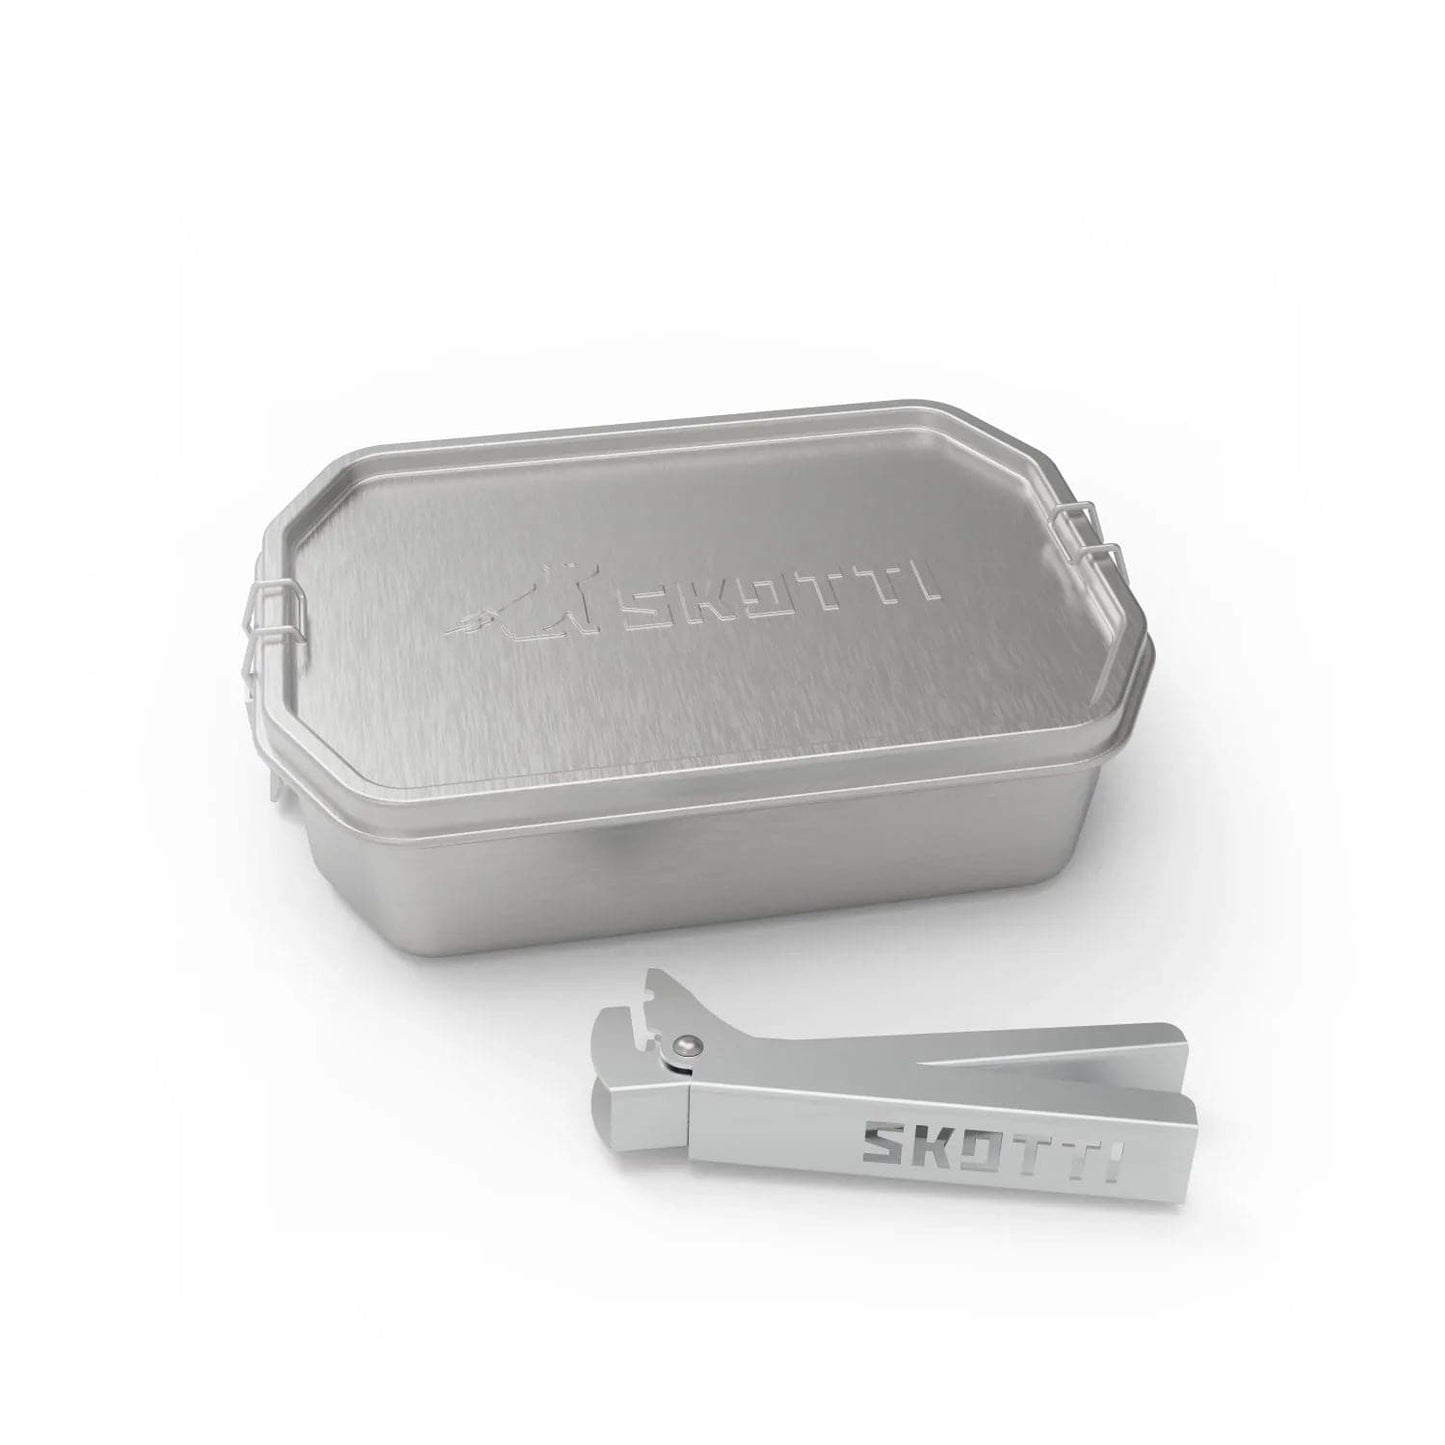 SKOTTI Boks small transportation box and cooking pot for skotti grill